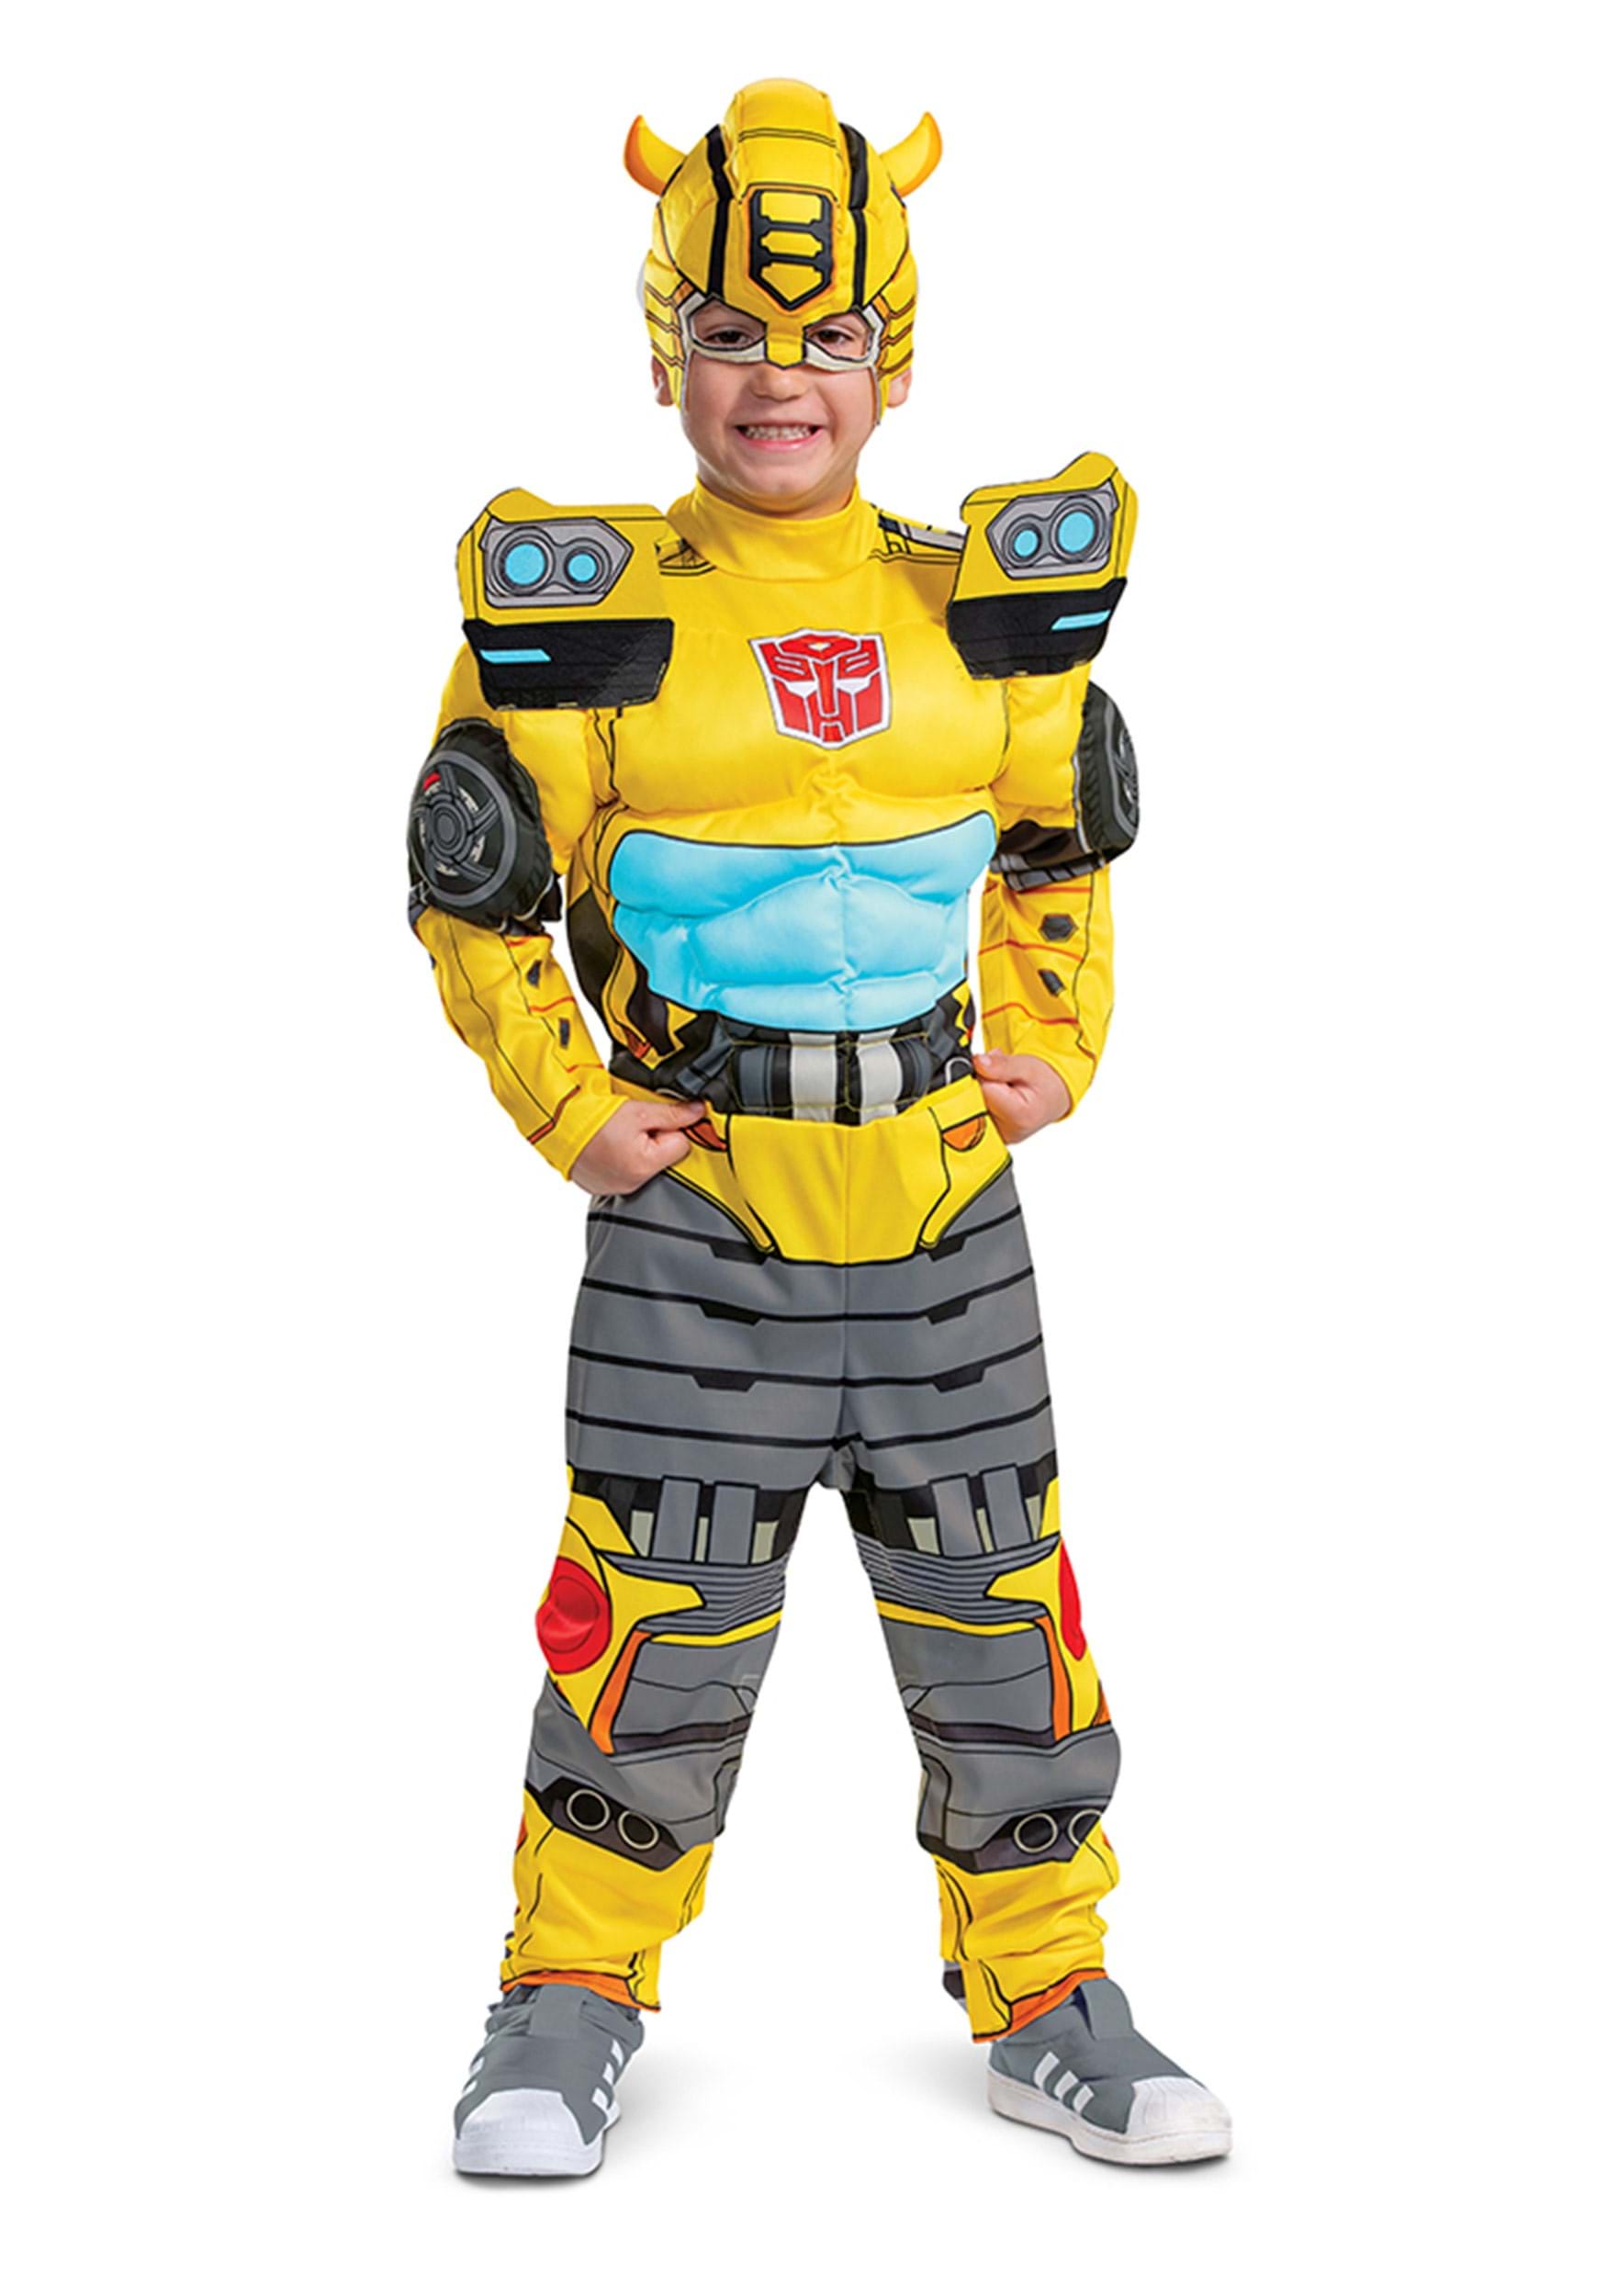 Image of Transformers Bumblebee Adaptive Costume for Kids ID DI120559-4/6